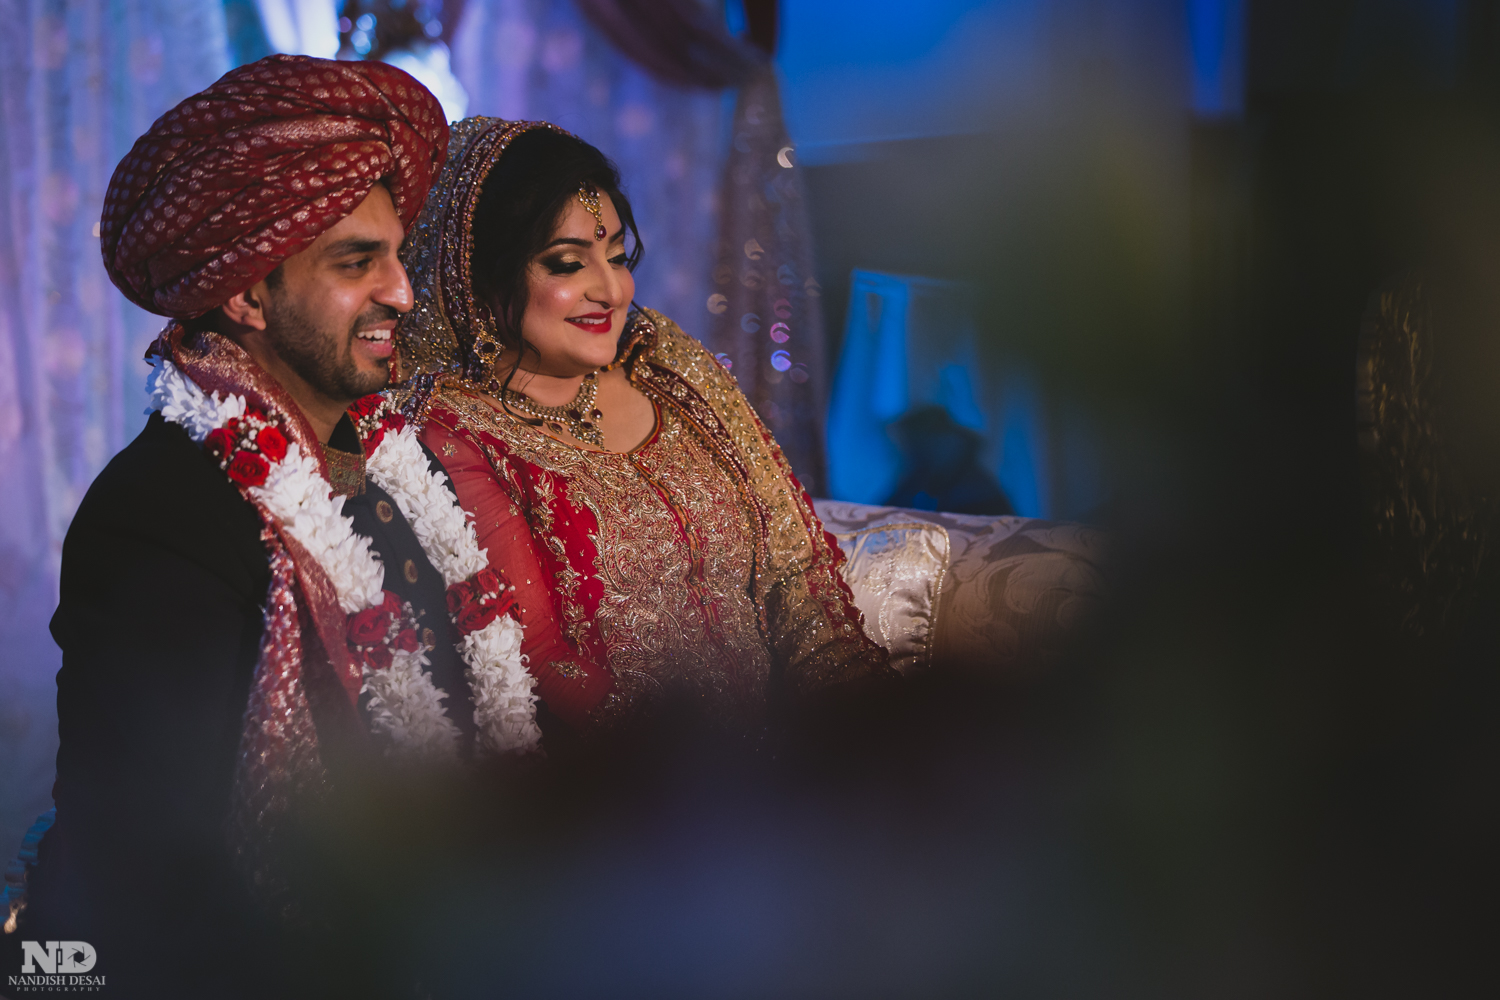 Nandish Desai Photography Weddings 10.jpg